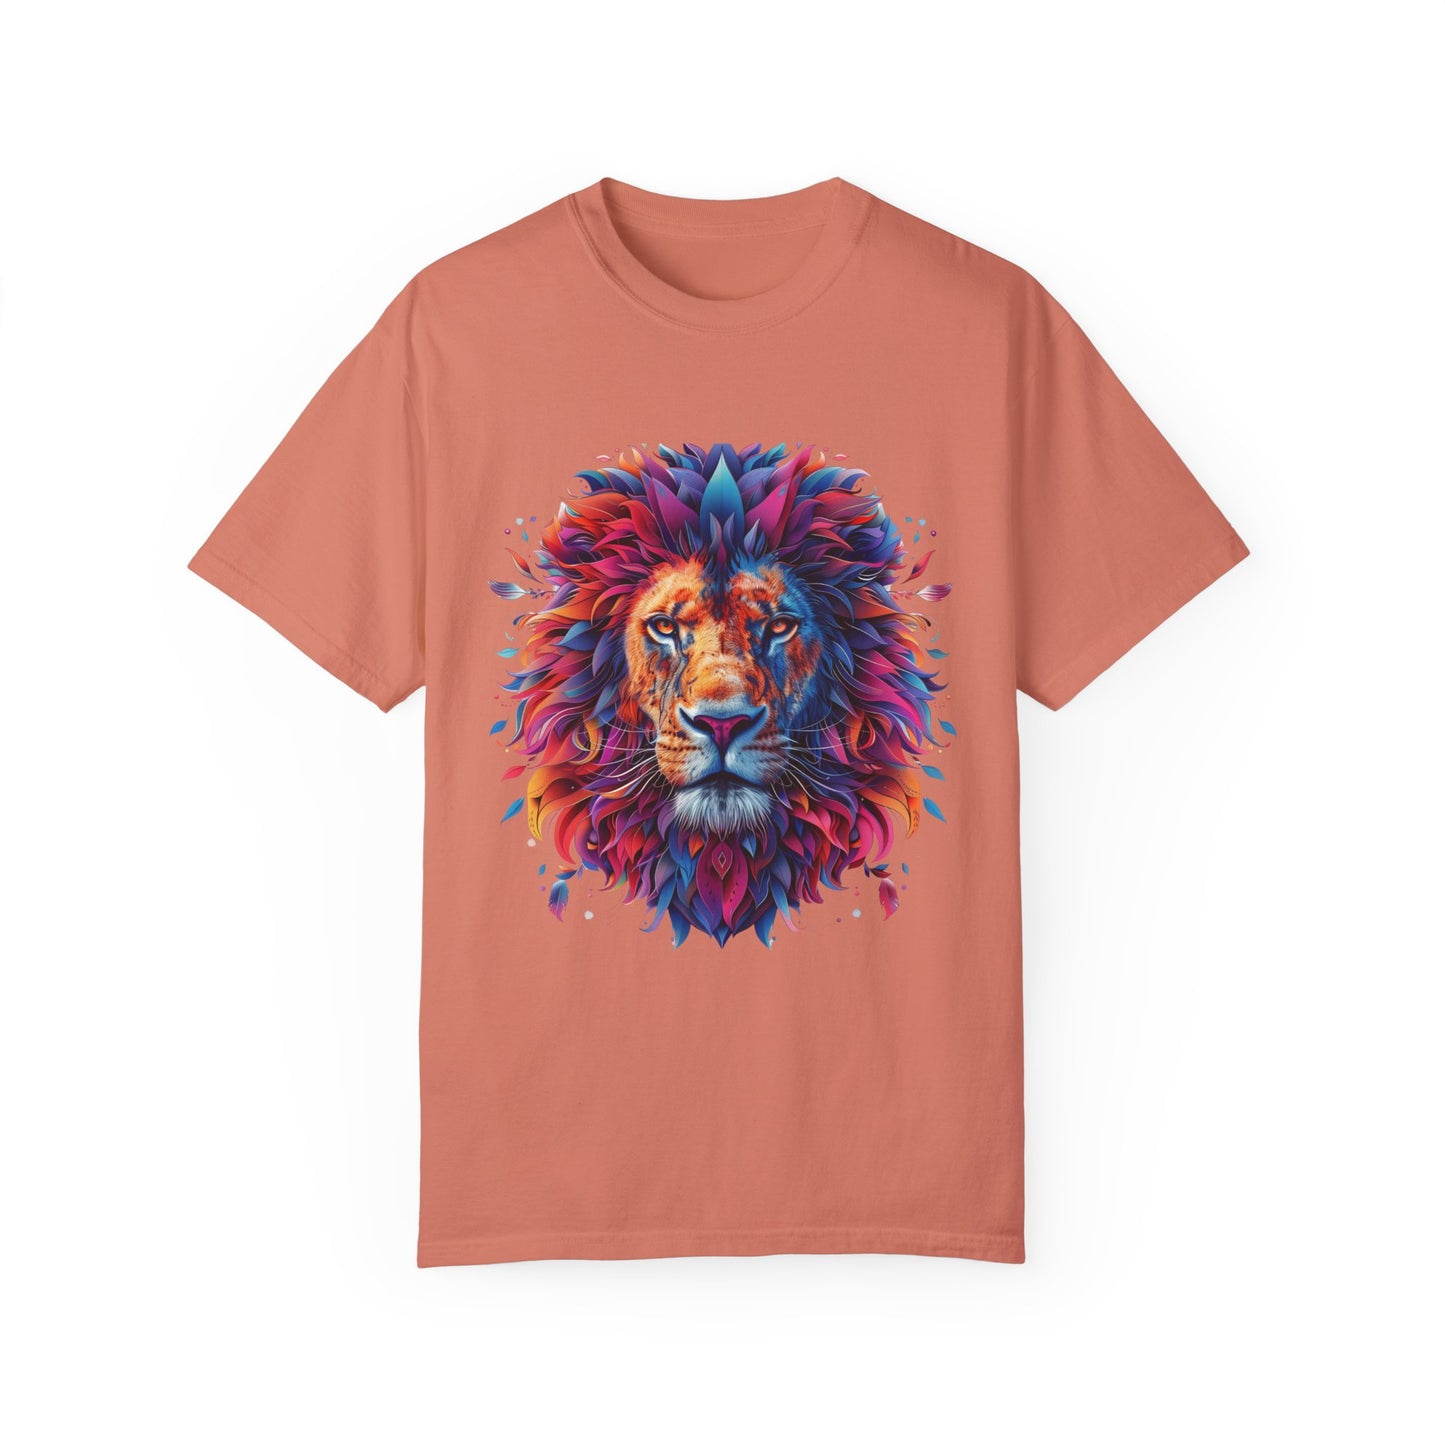 Lion Head Cool Graphic Design Novelty Unisex Garment-dyed T-shirt Cotton Funny Humorous Graphic Soft Premium Unisex Men Women Terracotta T-shirt Birthday Gift-14